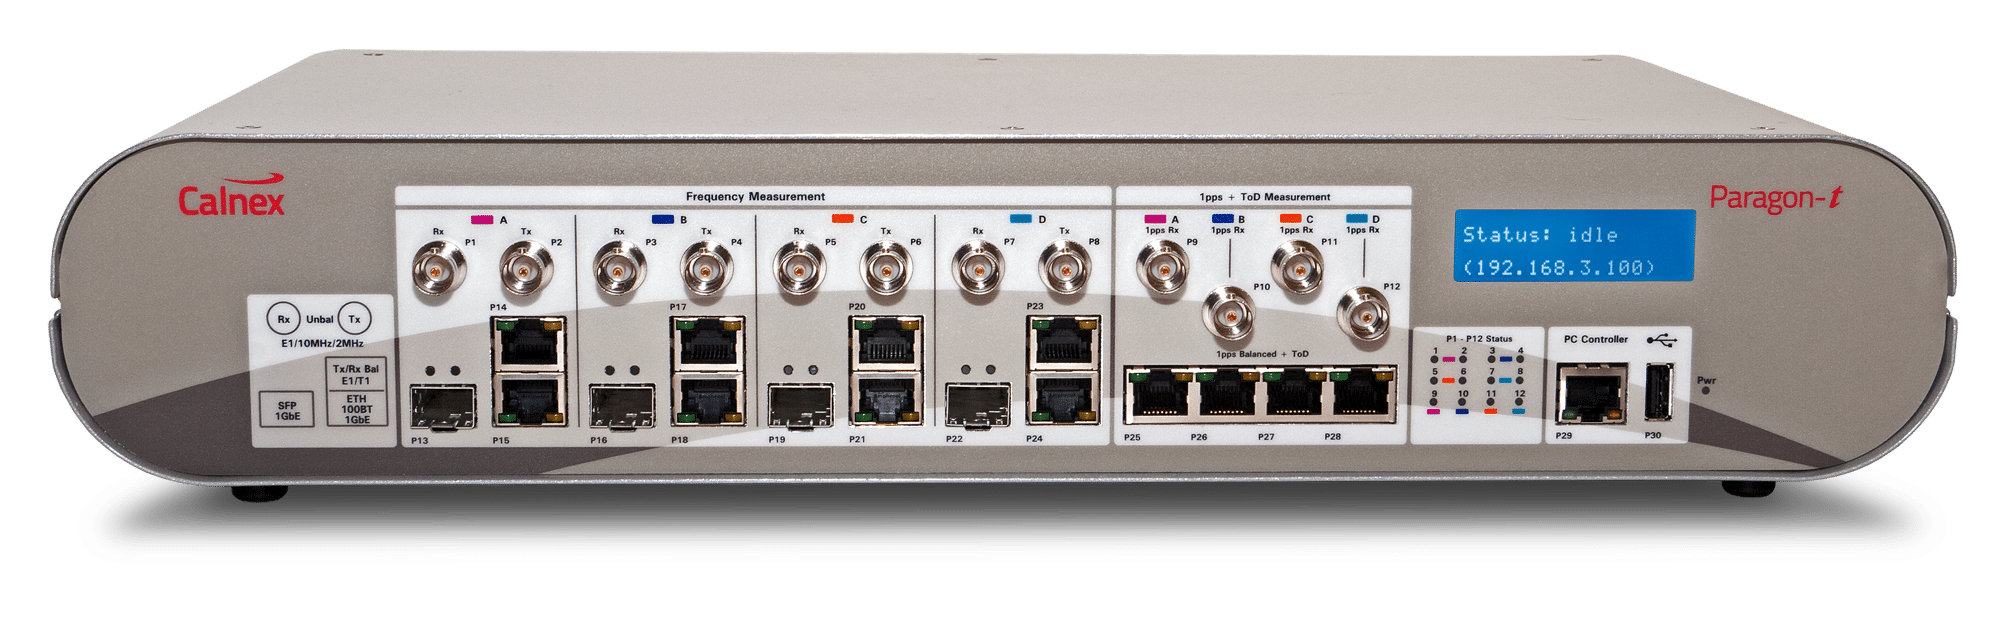 Calnex paragon software inc cisco router web monitoring software